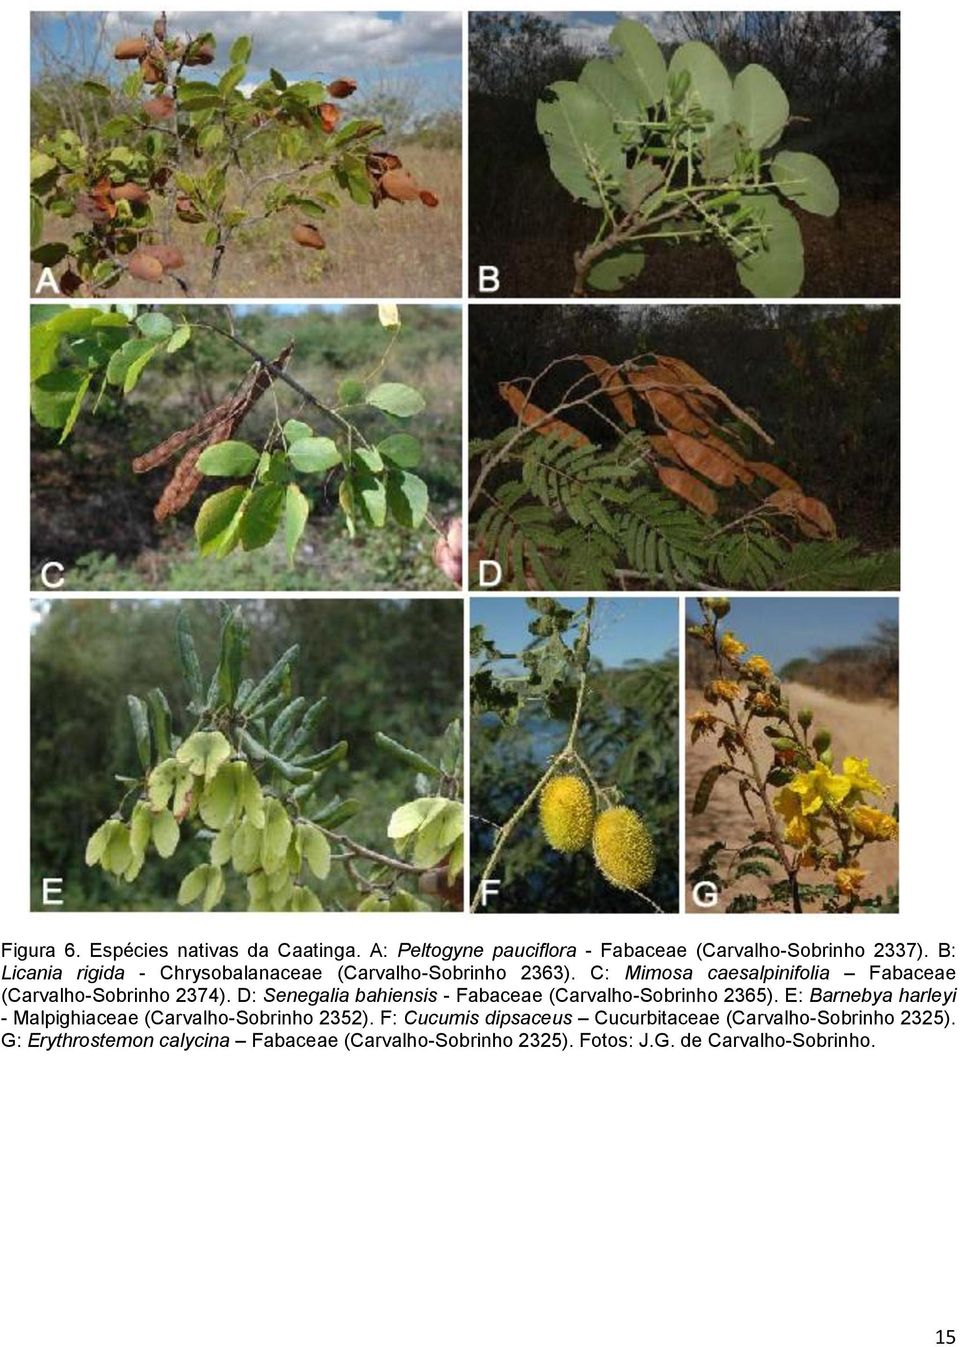 D: Senegalia bahiensis - Fabaceae (Carvalho-Sobrinho 2365). E: Barnebya harleyi - Malpighiaceae (Carvalho-Sobrinho 2352).